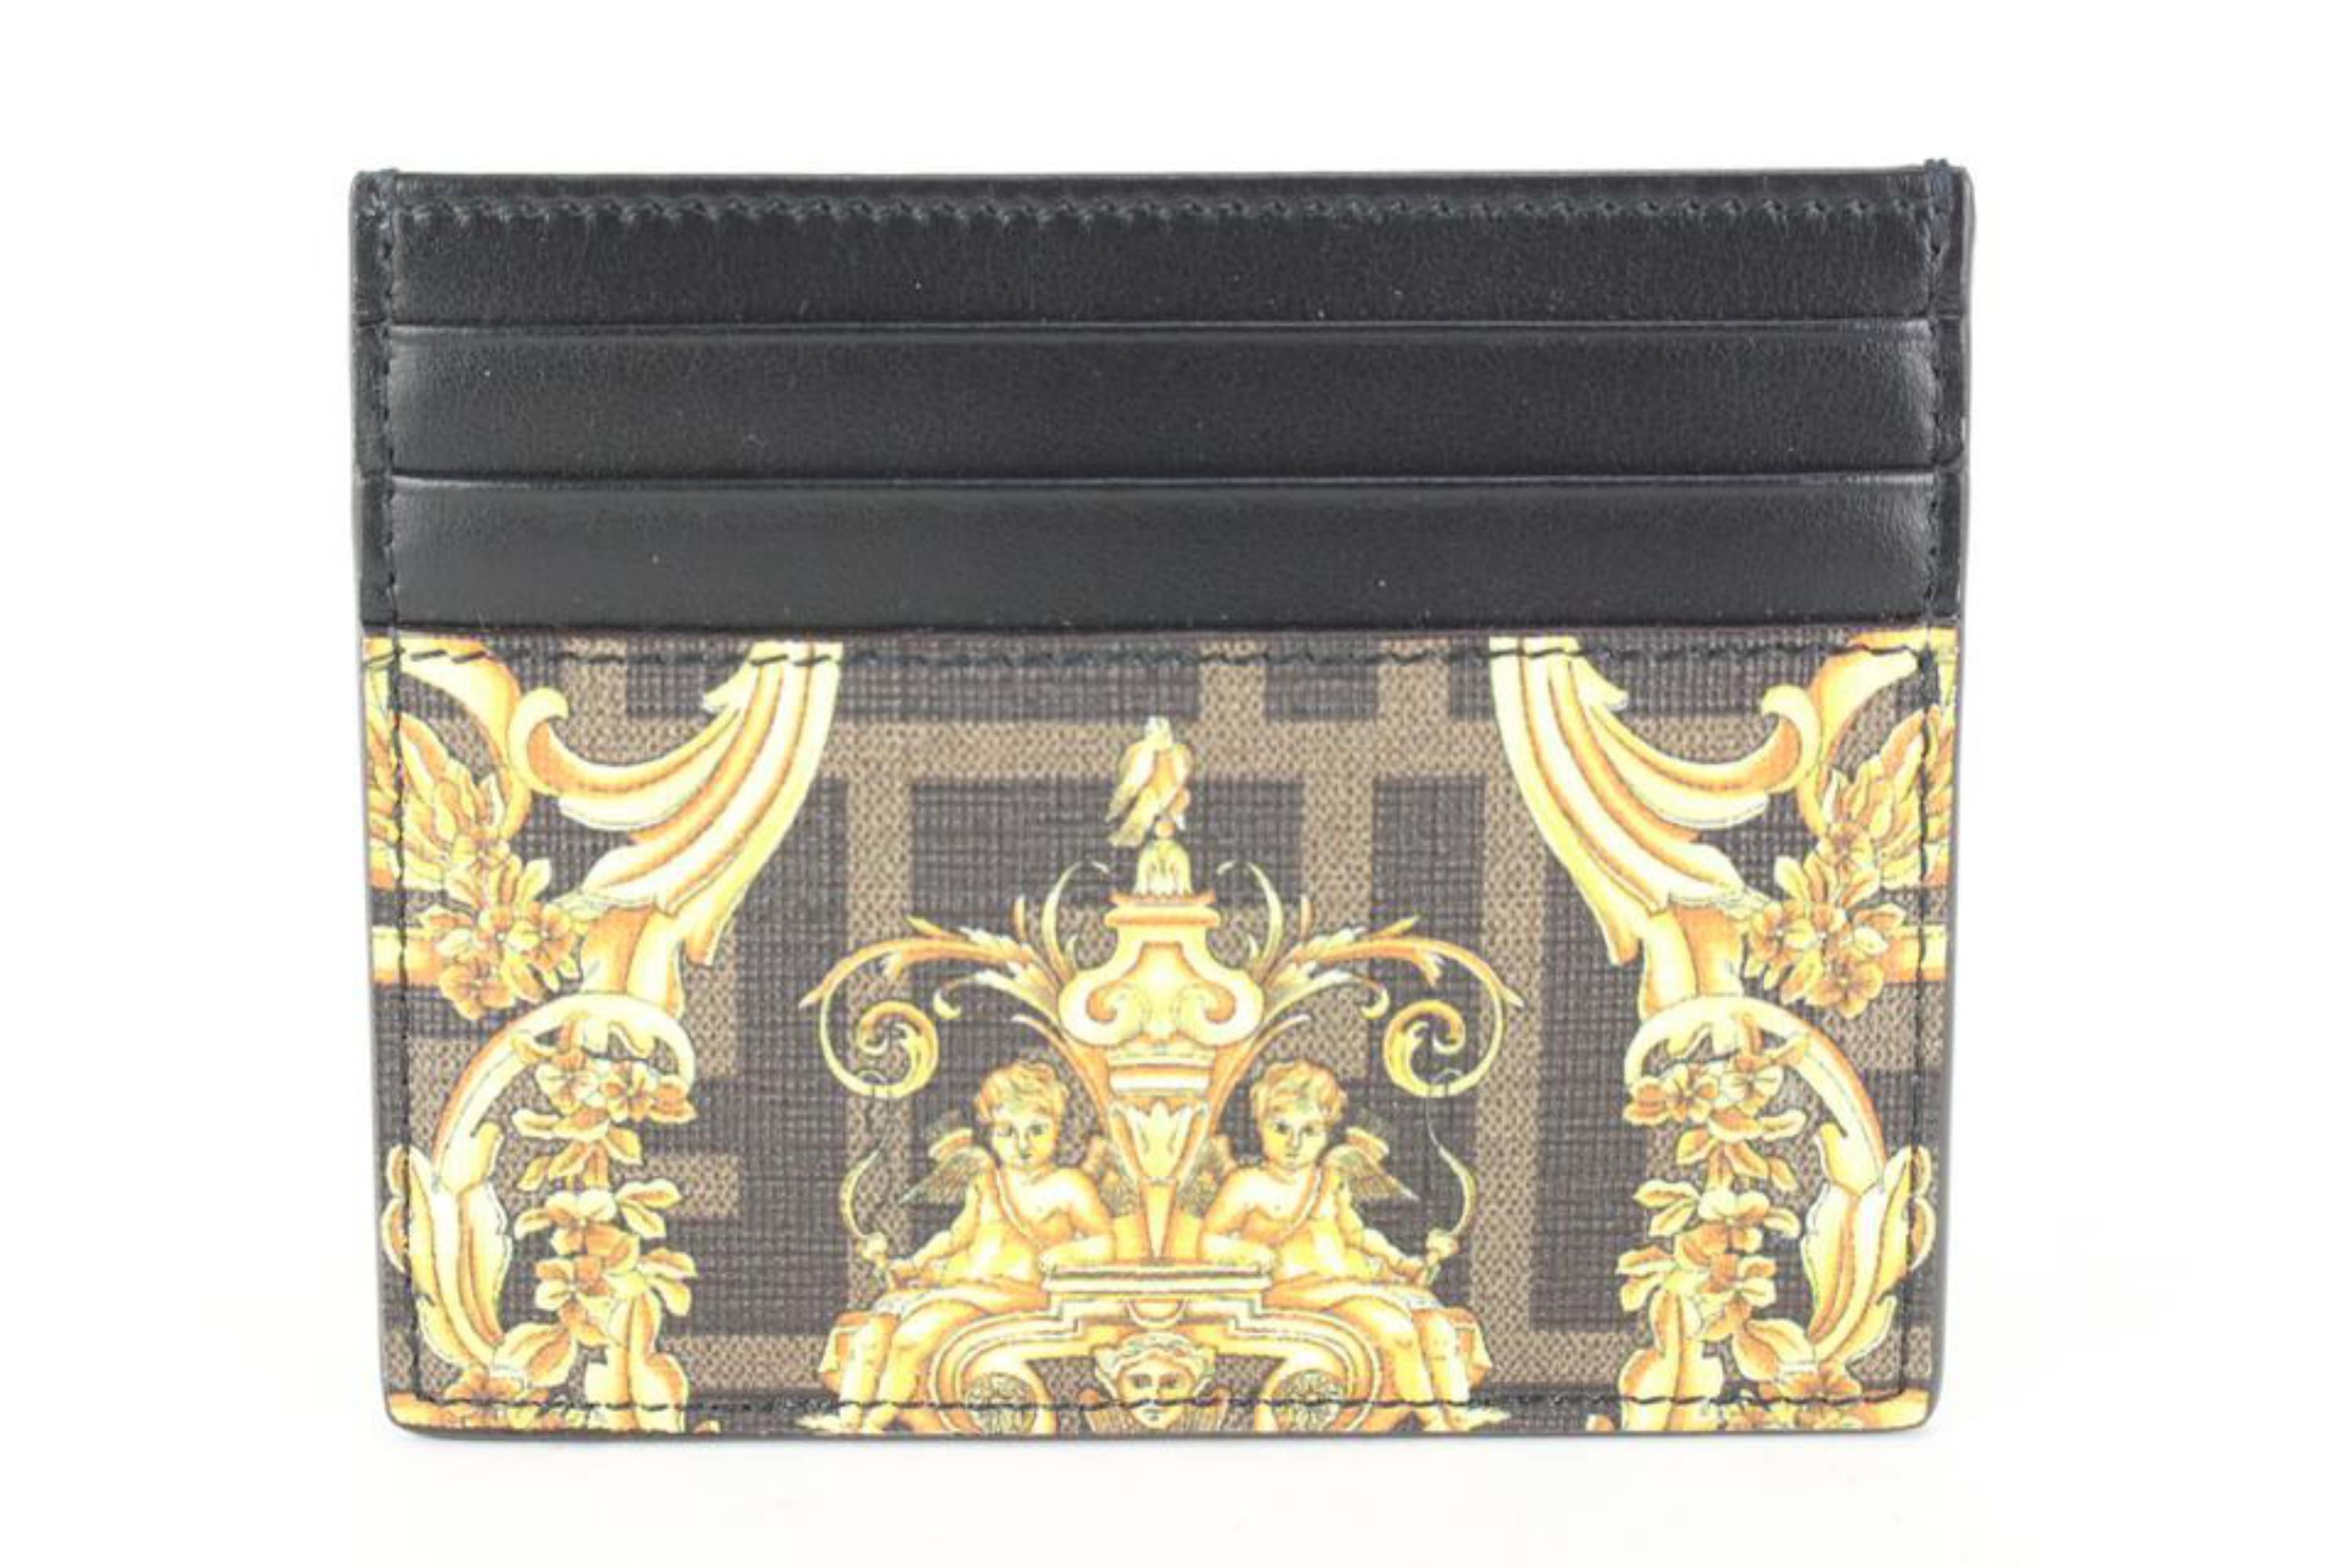 Fendi x Versace Fendace Card Holder Wallet Case 91v516s For Sale 1